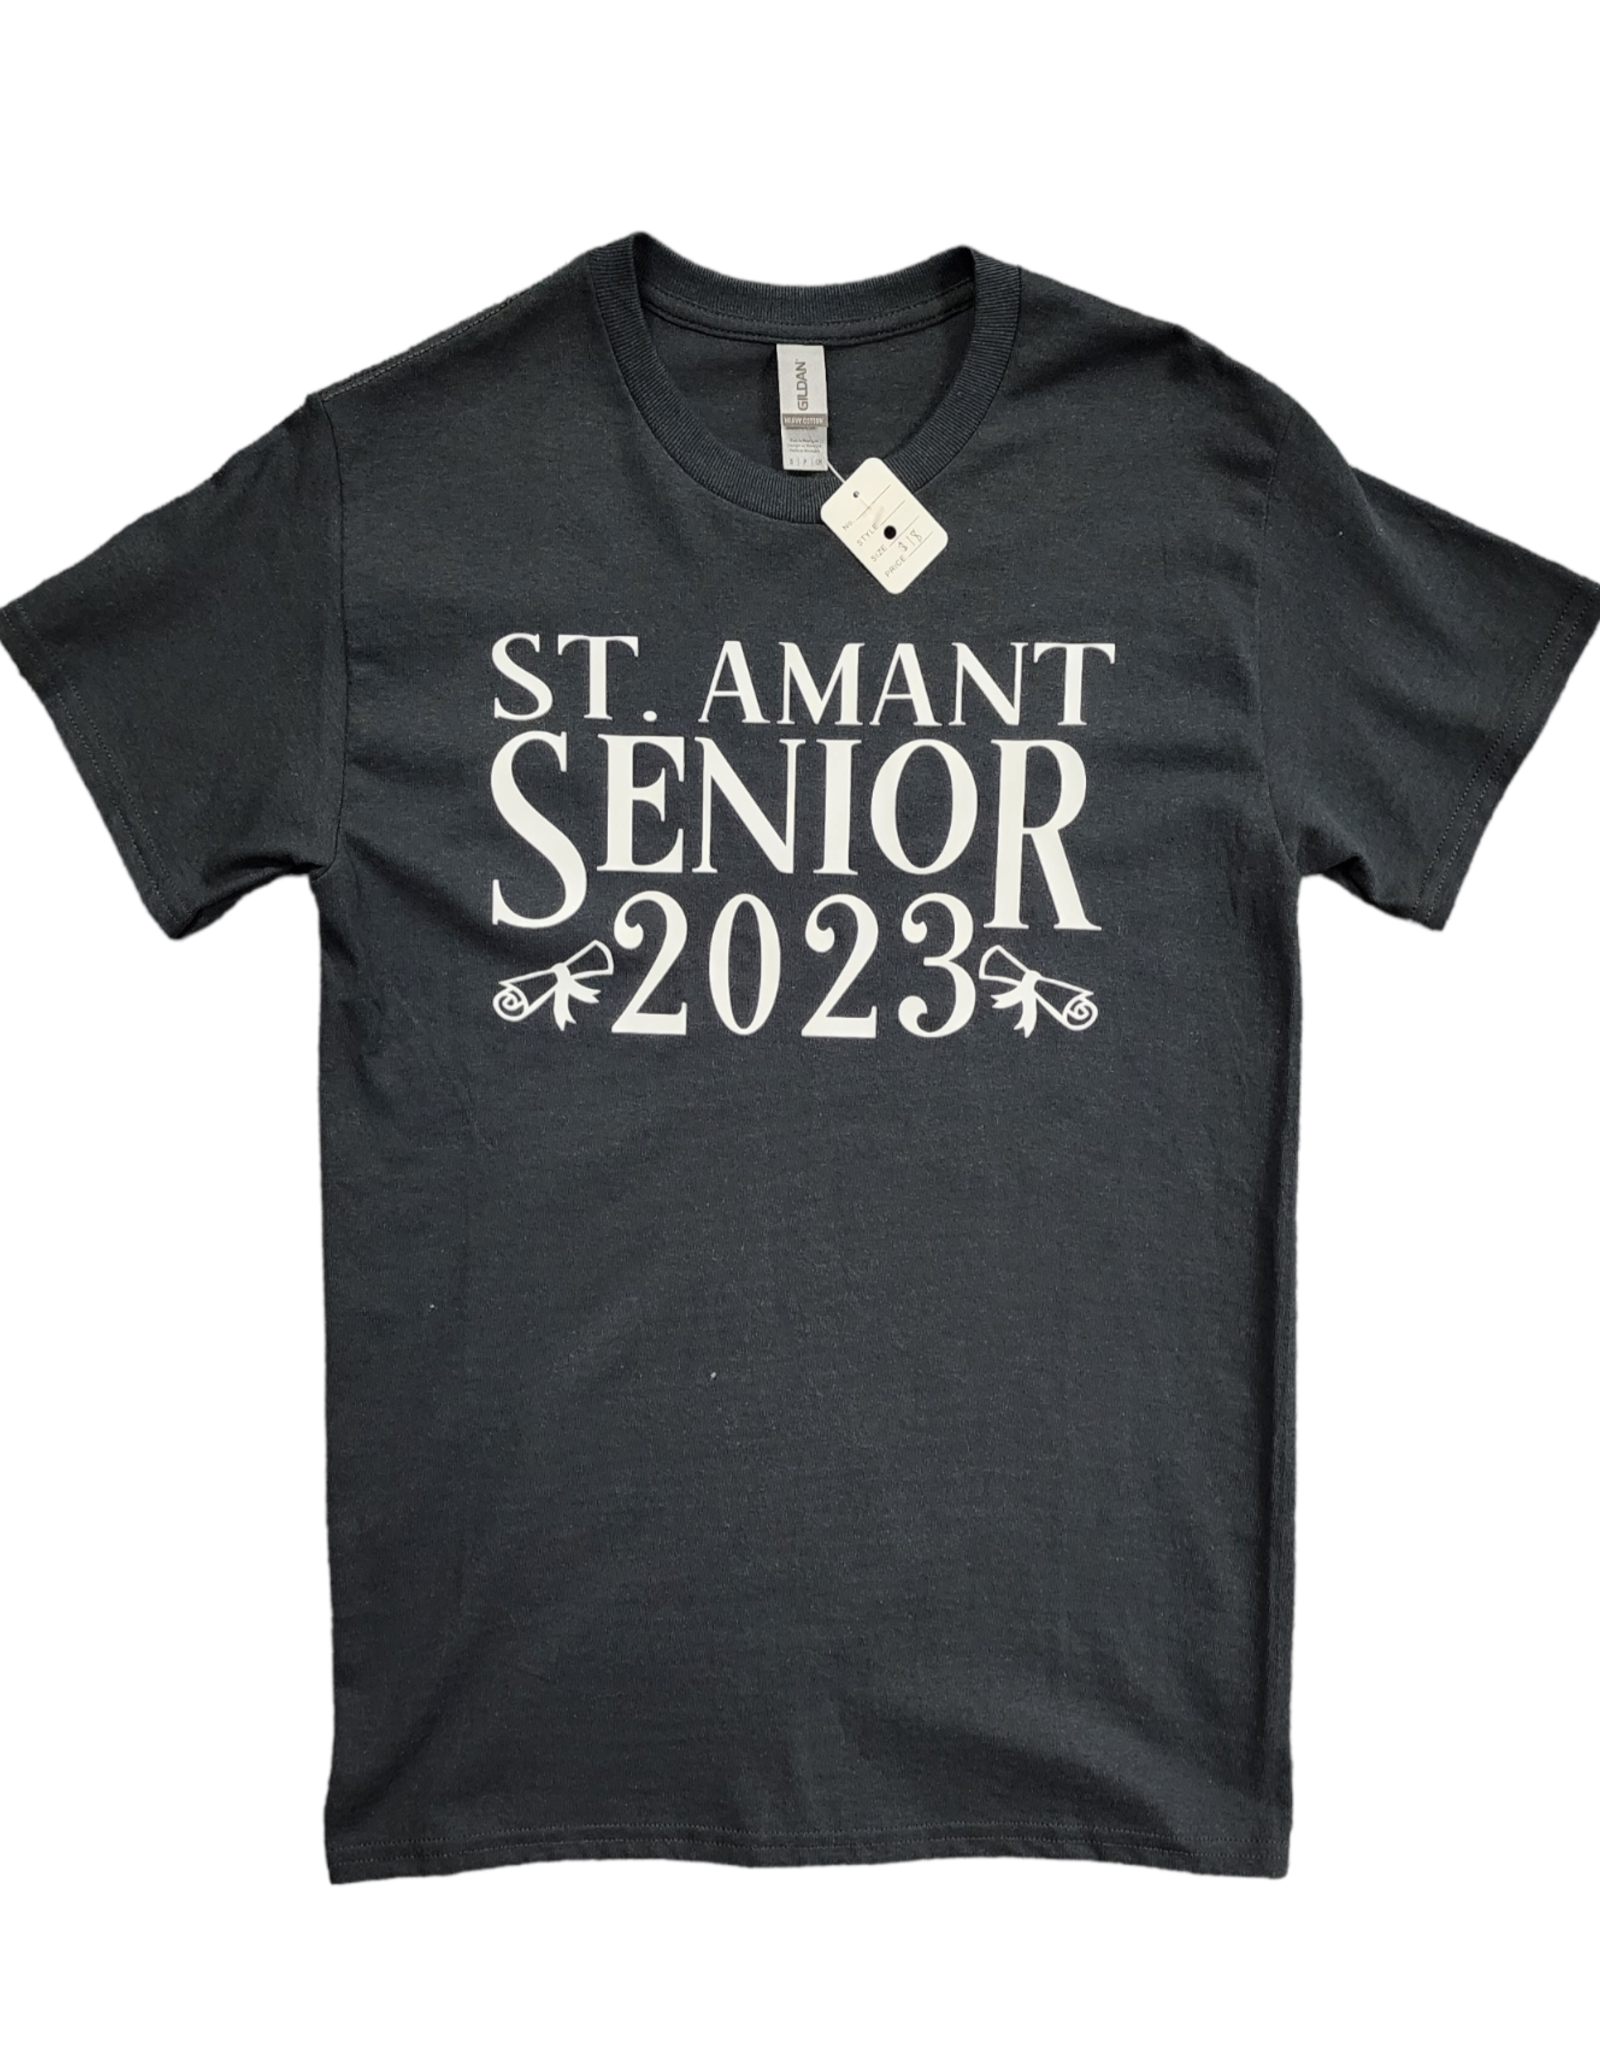 St. Amant Senior (Adult Small)